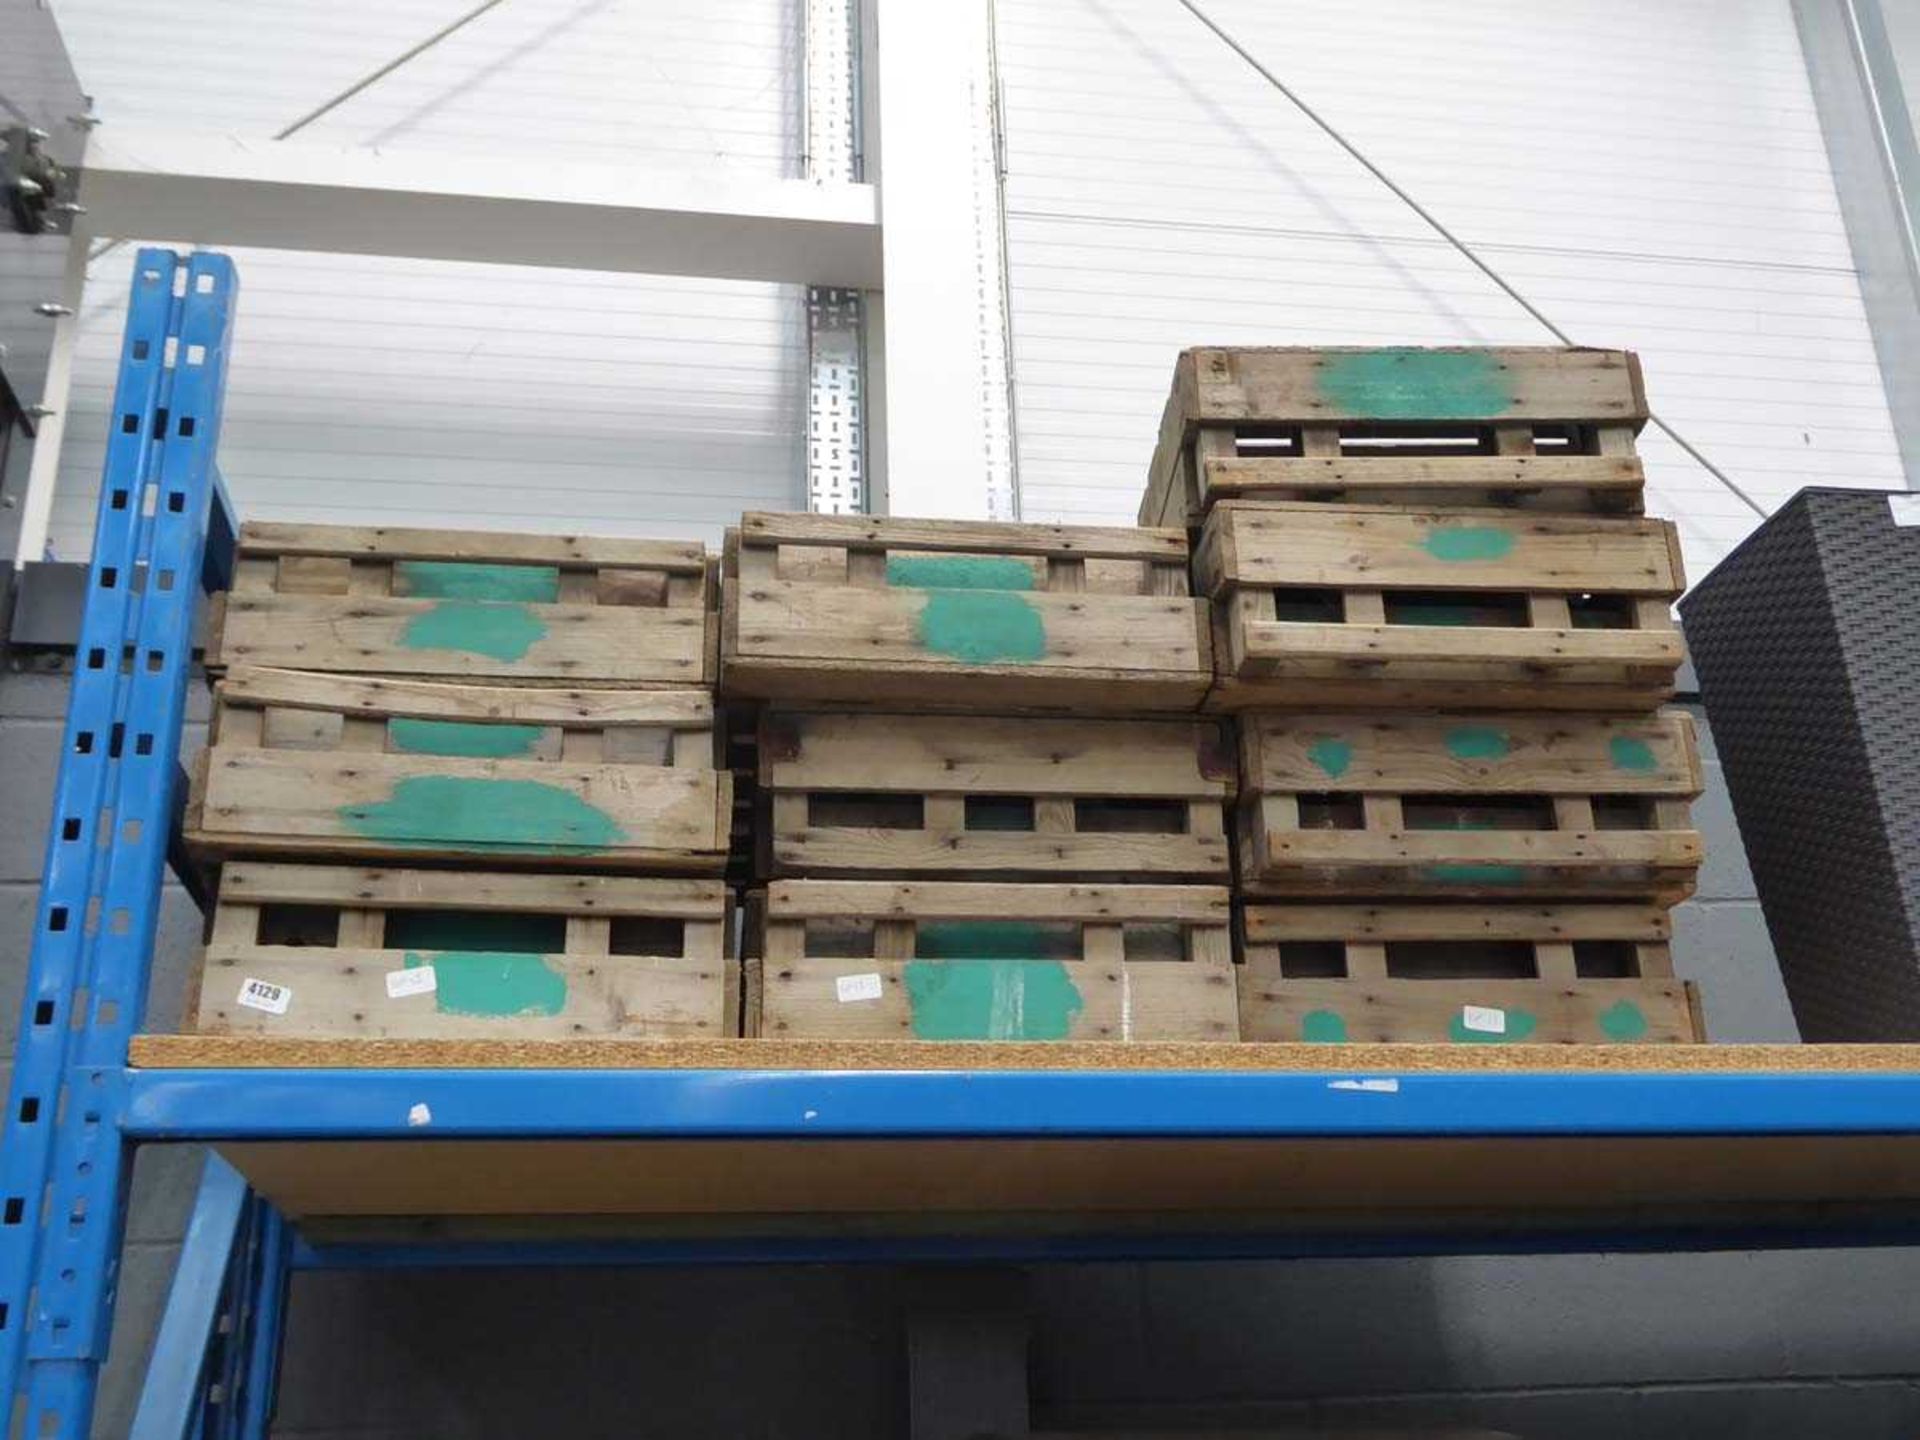 20 potato crates